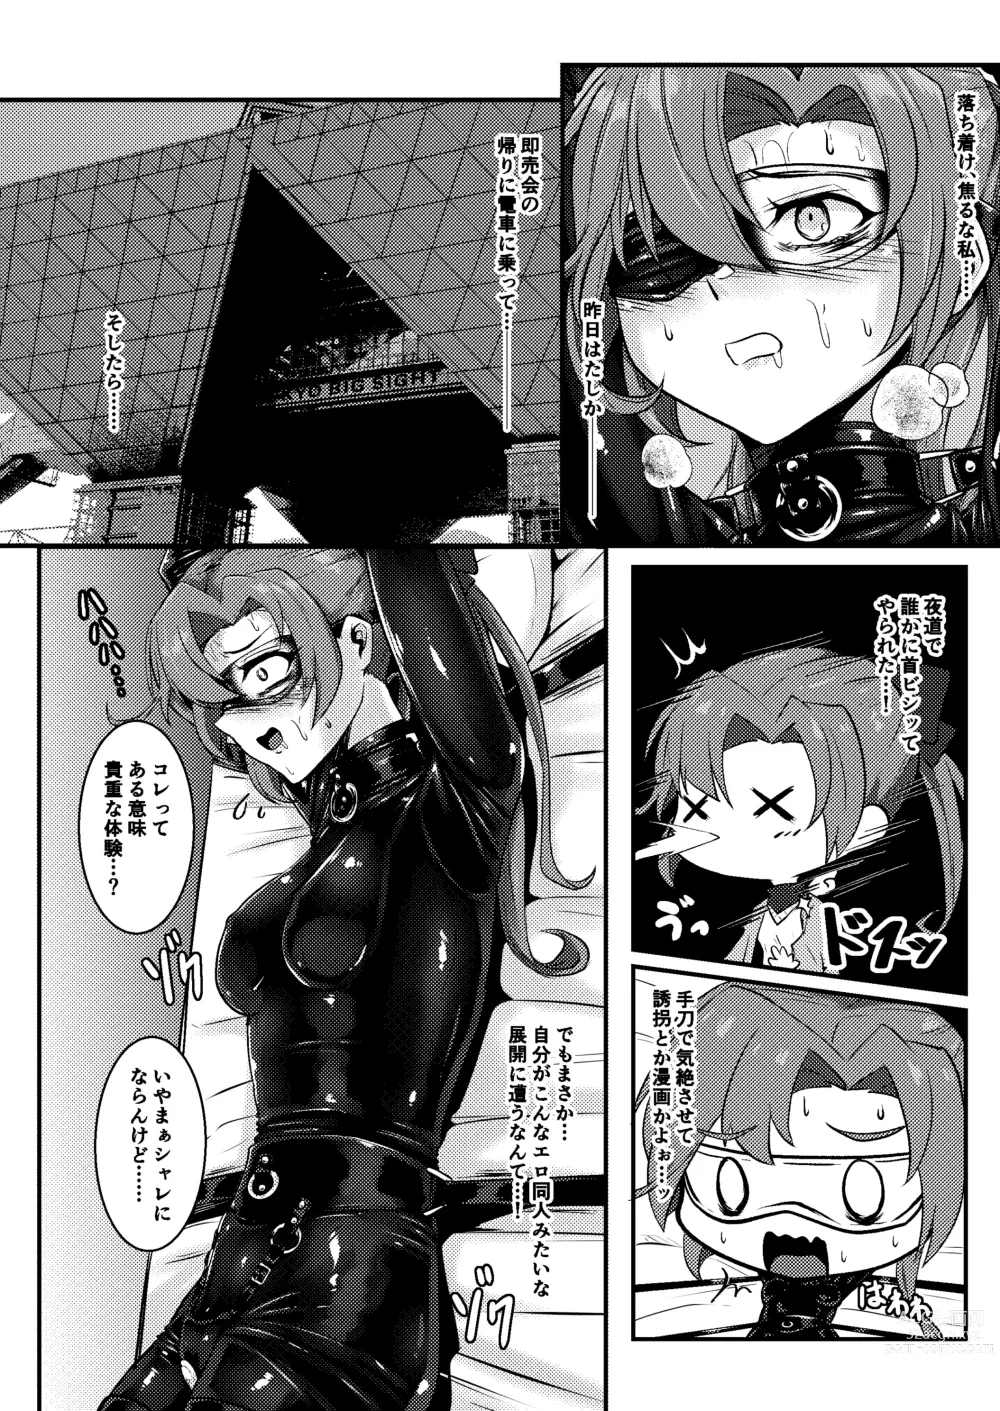 Page 6 of doujinshi Revenge is sweet